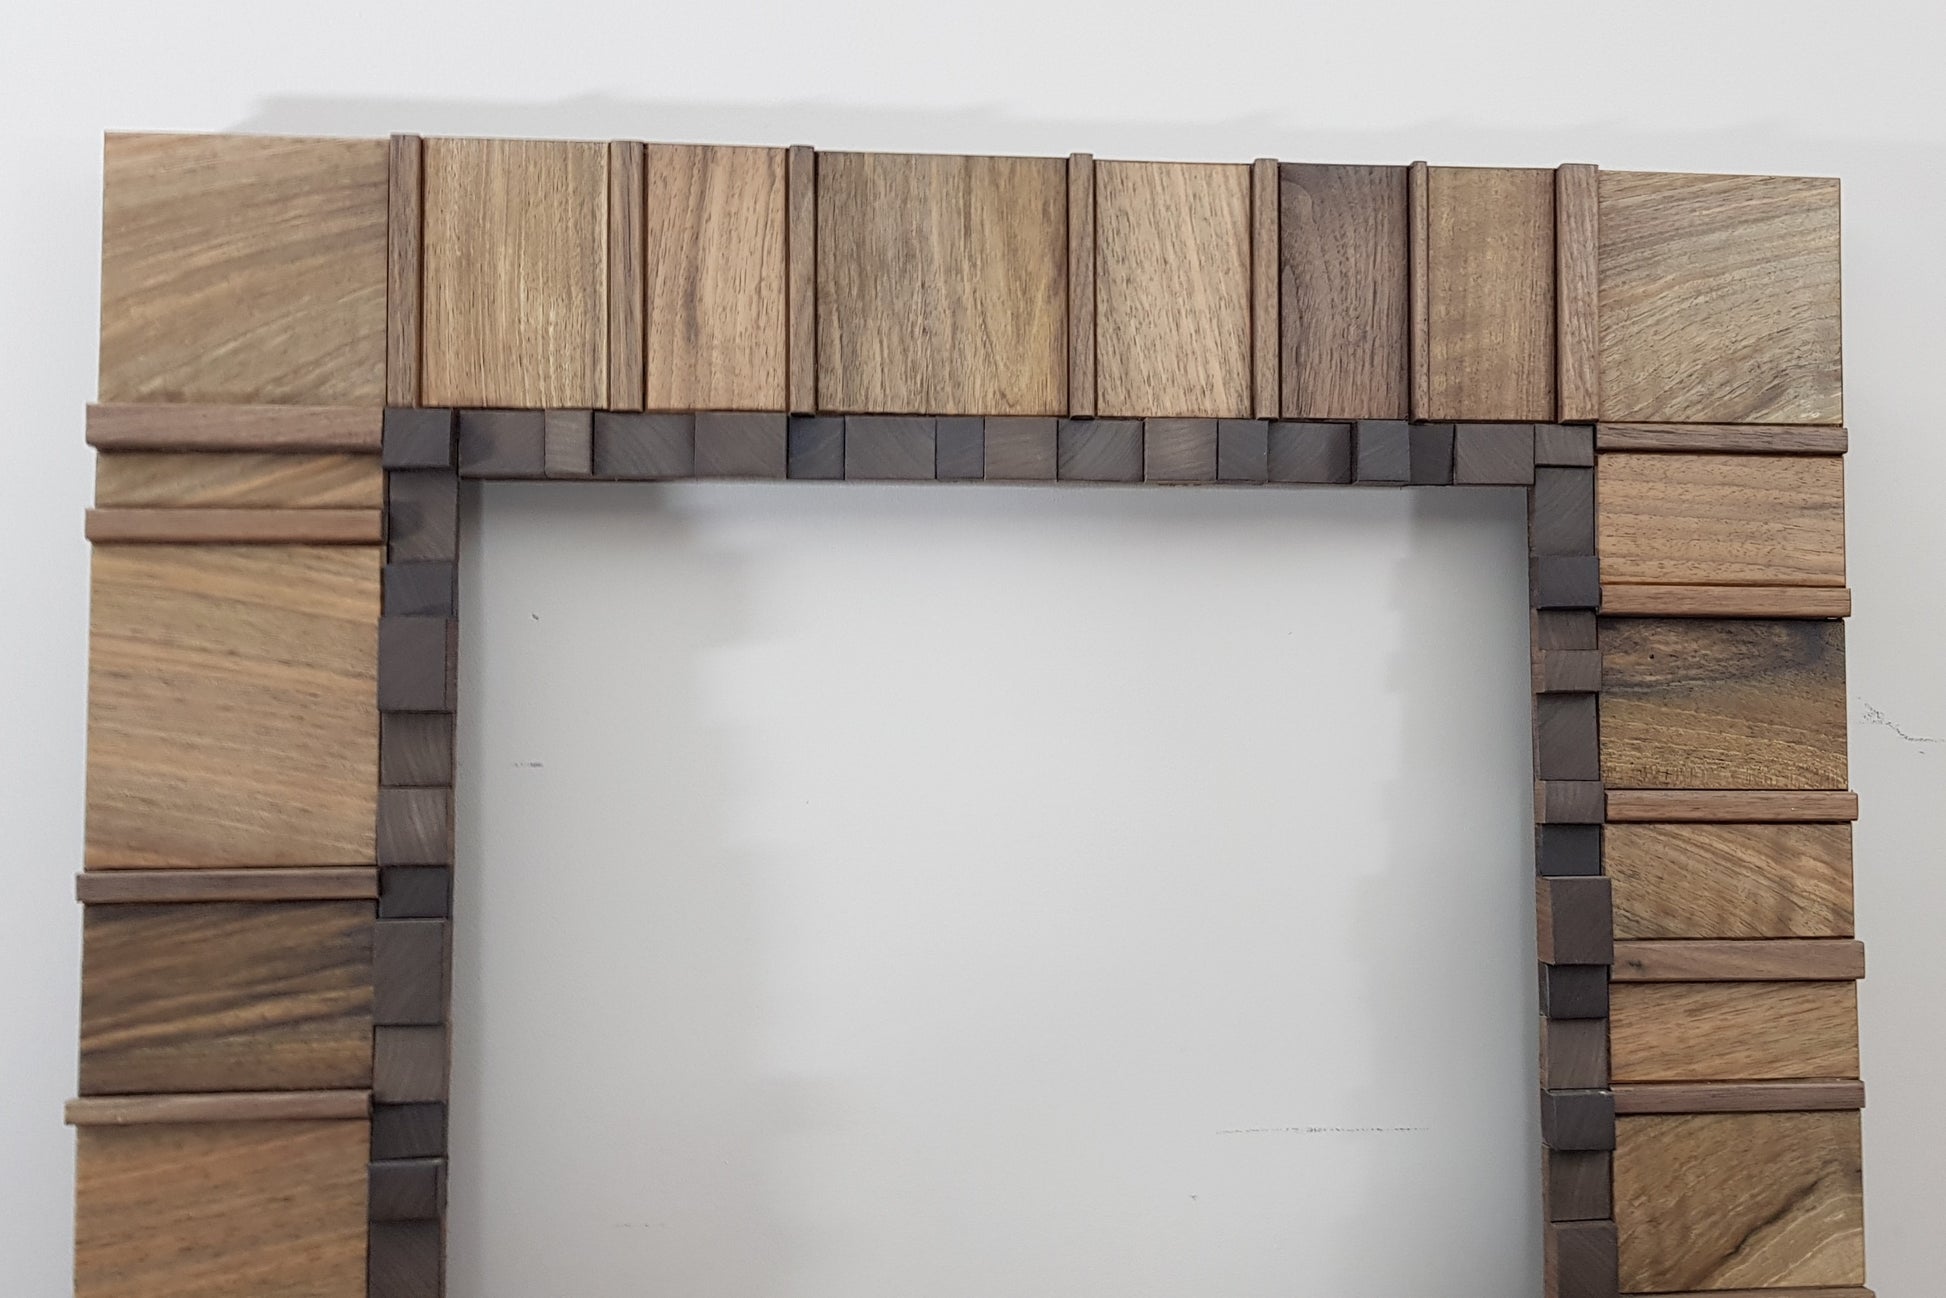 Living room statement mirror frame in walnut